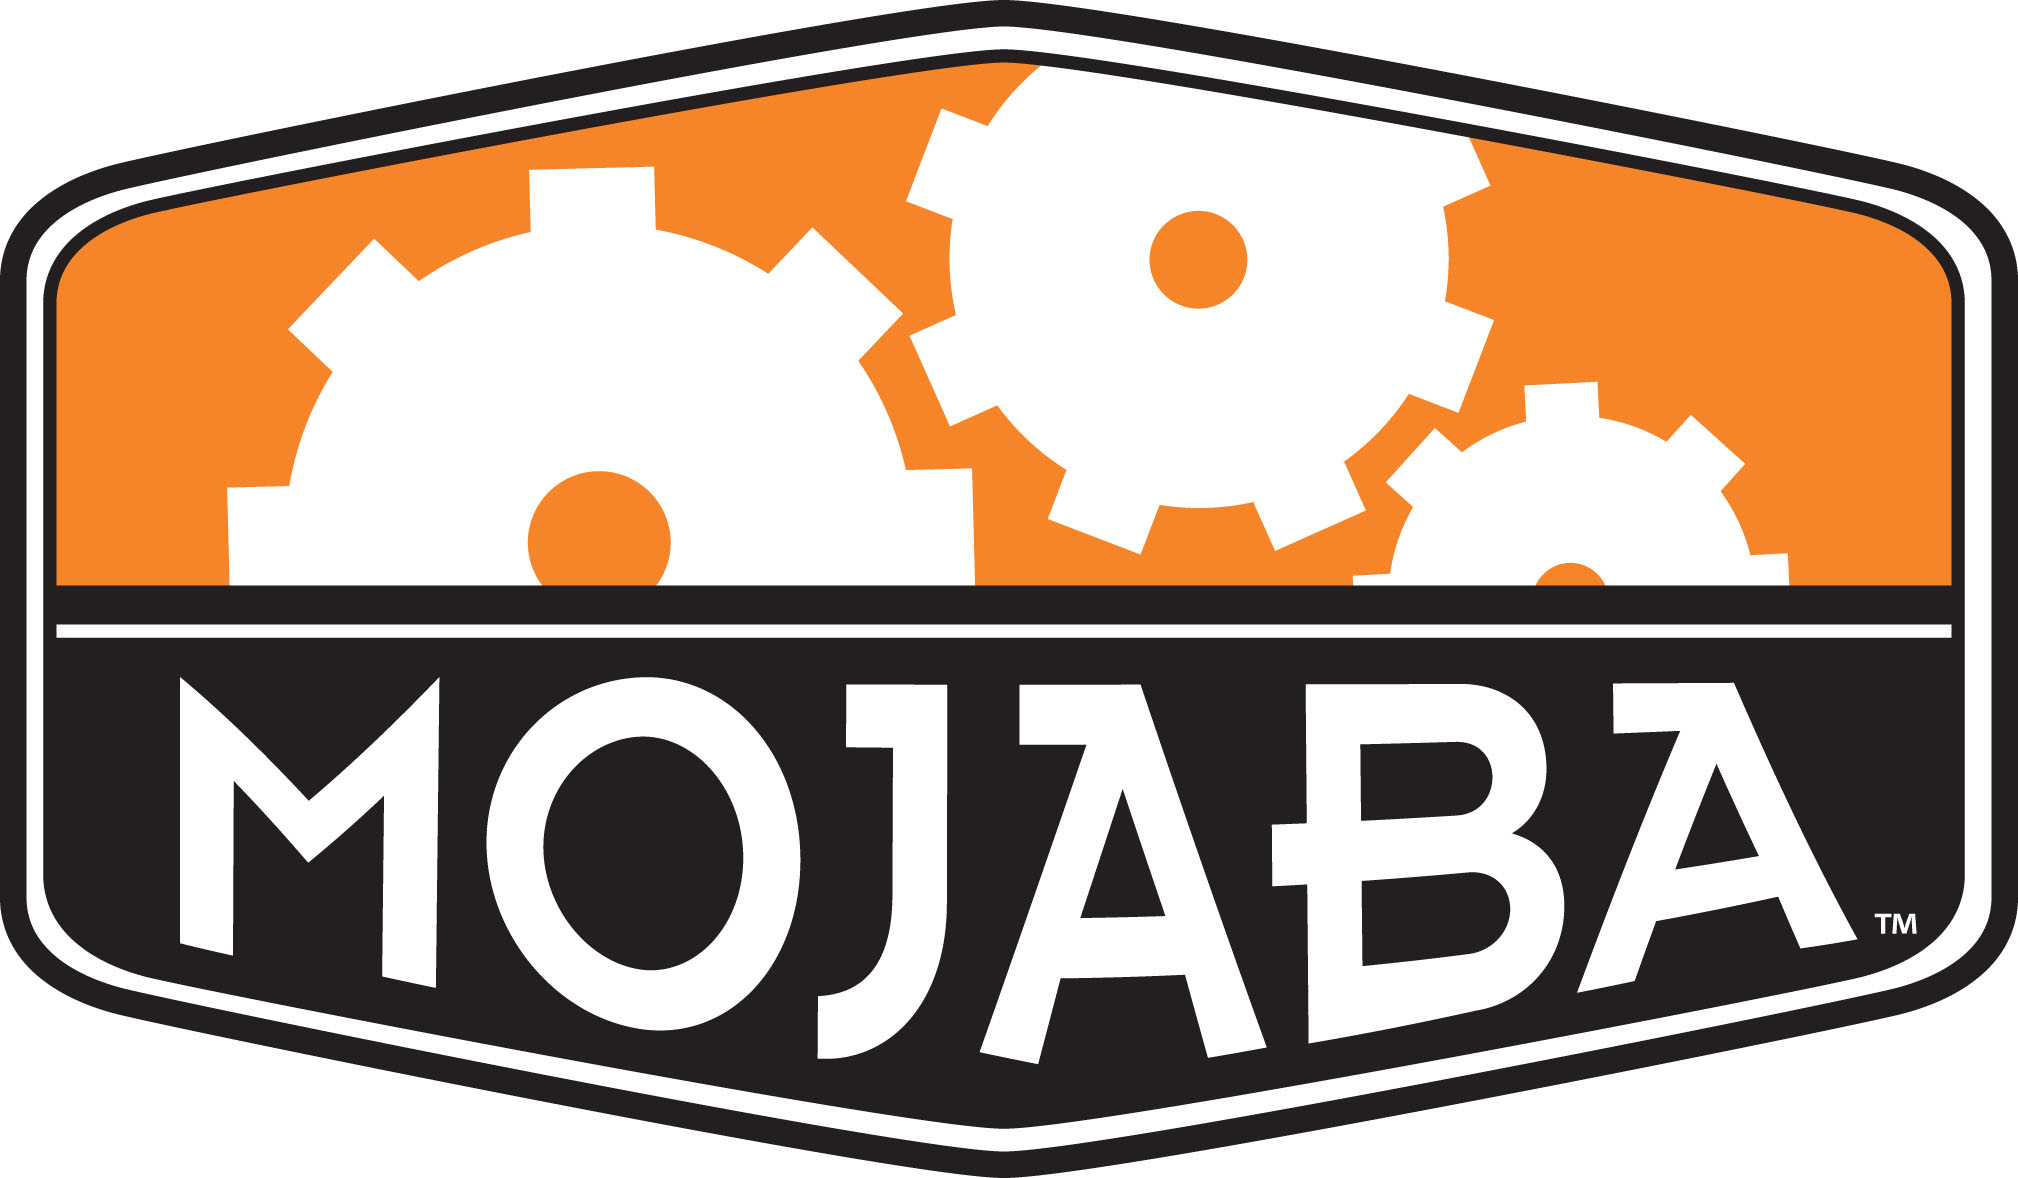 Mojaba - the leading tool for creating optimized mobile sites